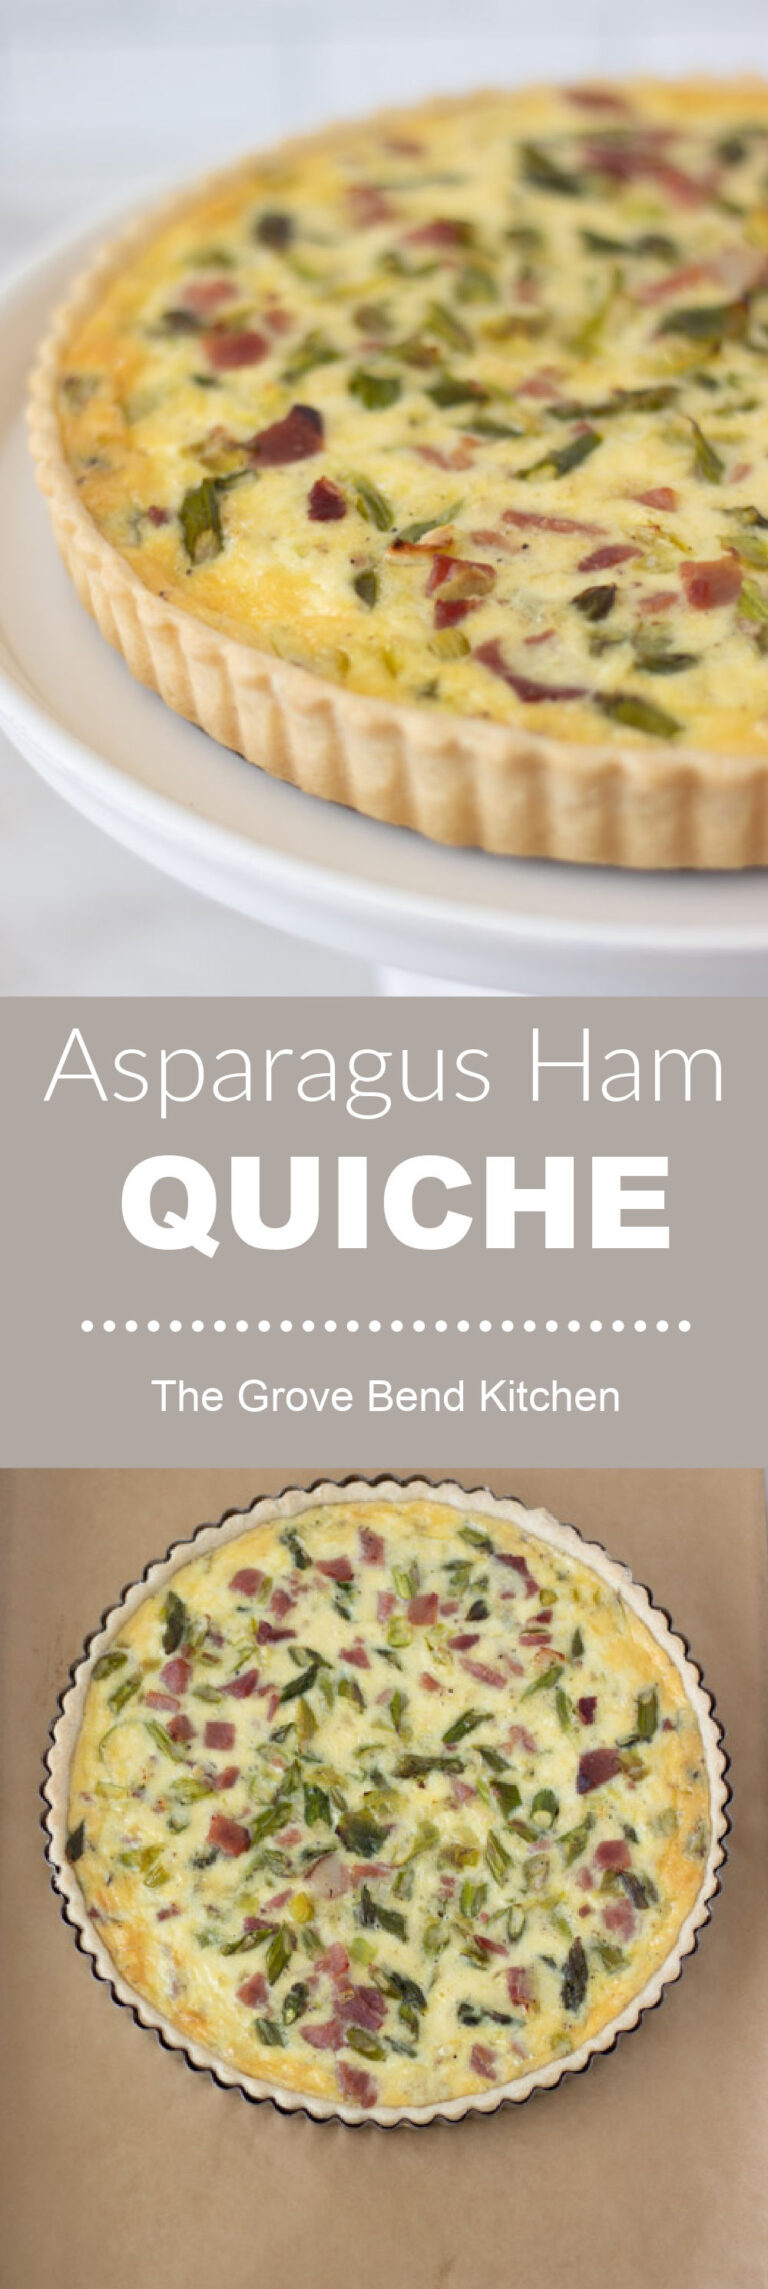 Asparagus Ham Quiche - The Grove Bend Kitchen